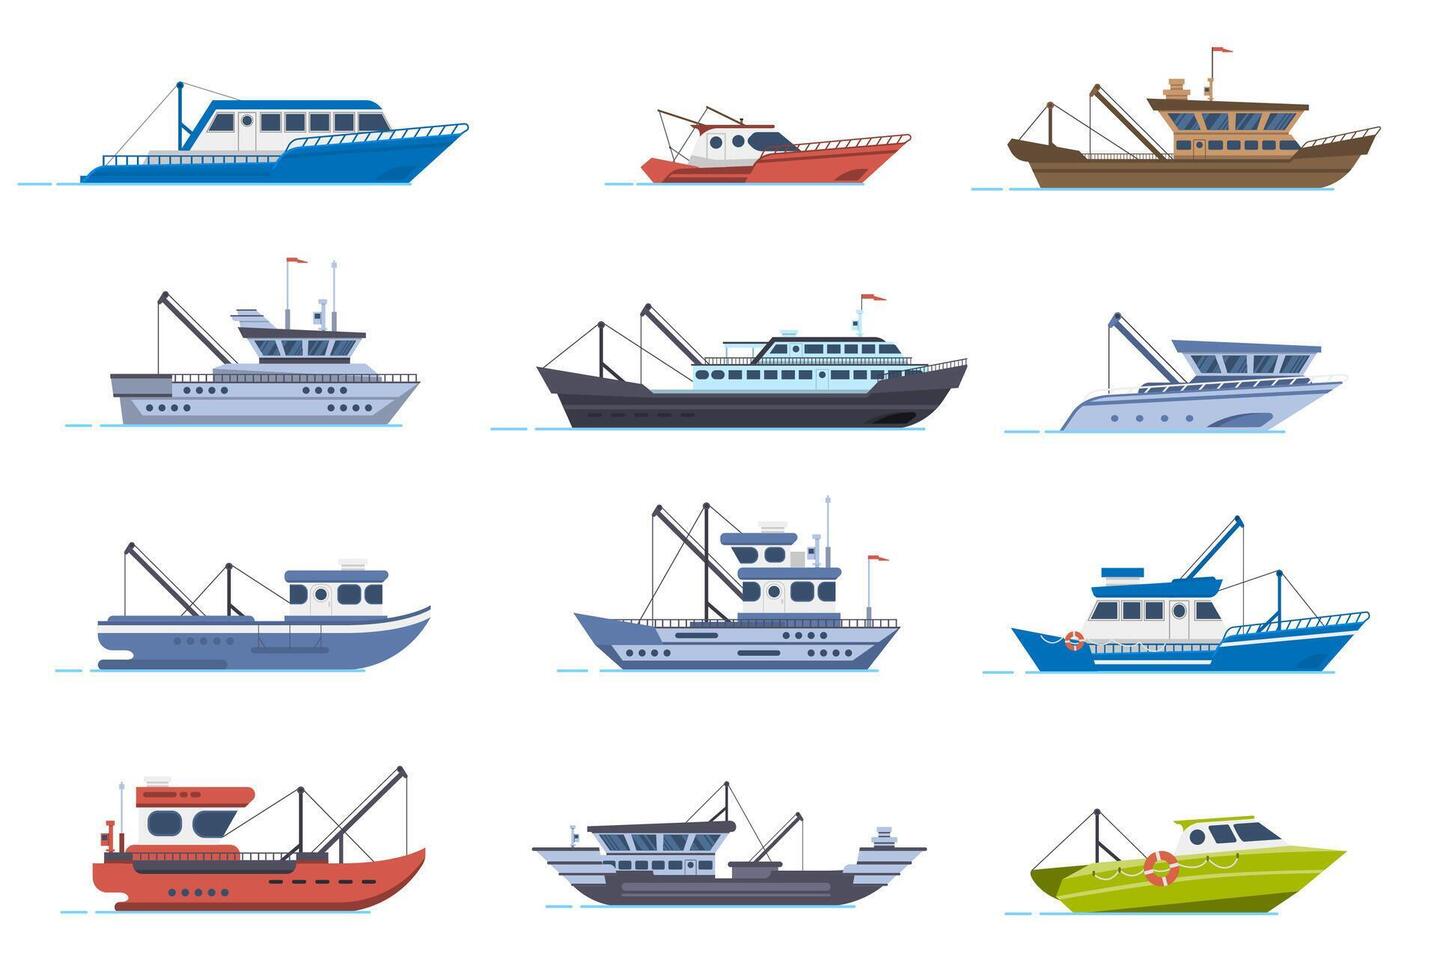 pescador barcos pescar comercial buques, pescador mar barco para Oceano agua, Envío Mariscos industria barco aislado vector ilustración conjunto